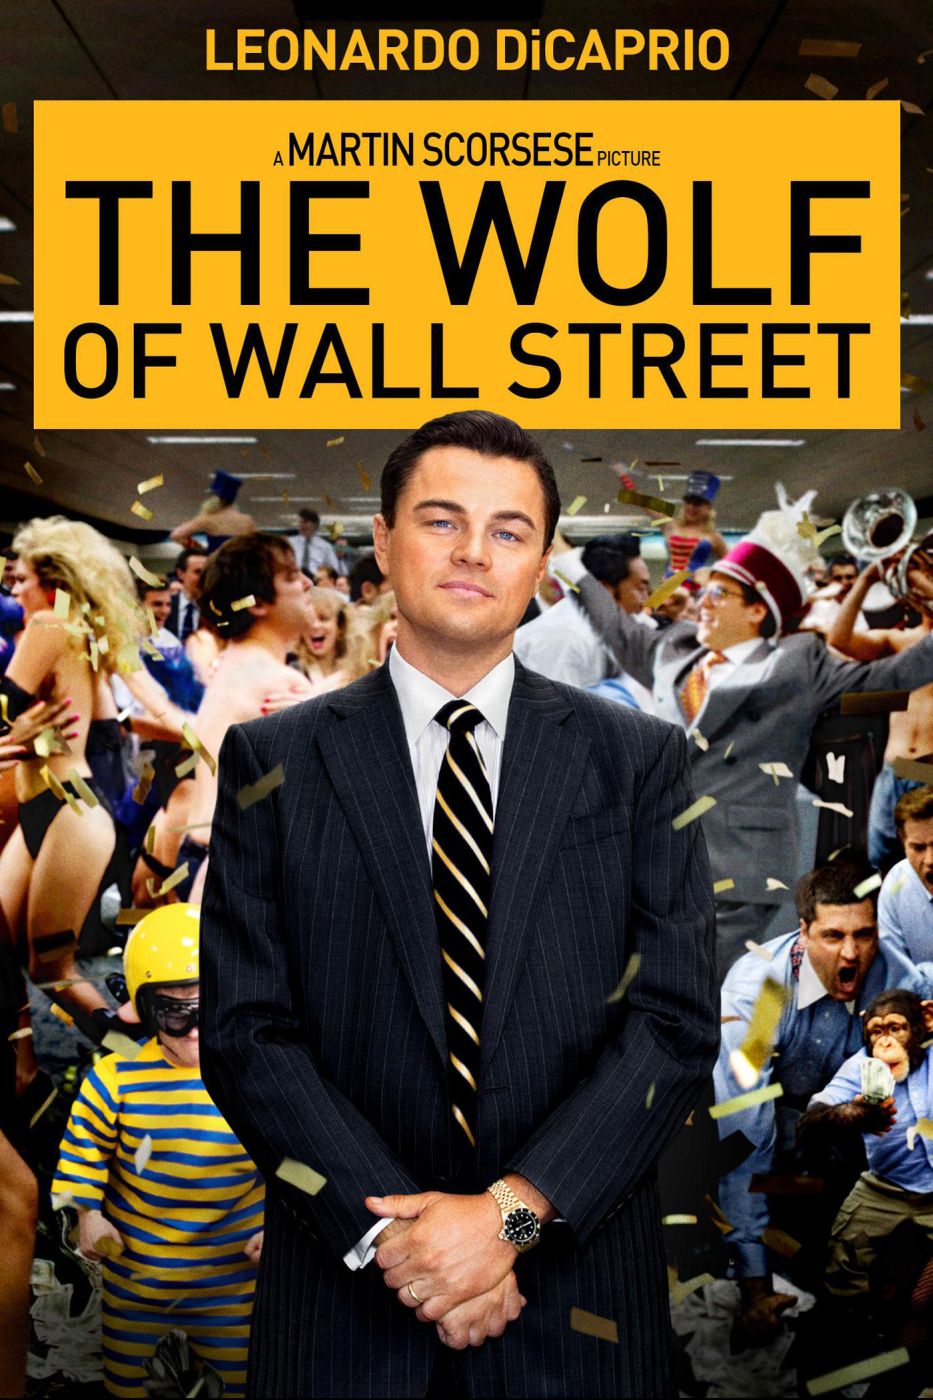 The Wolf of Wall Street.jpg